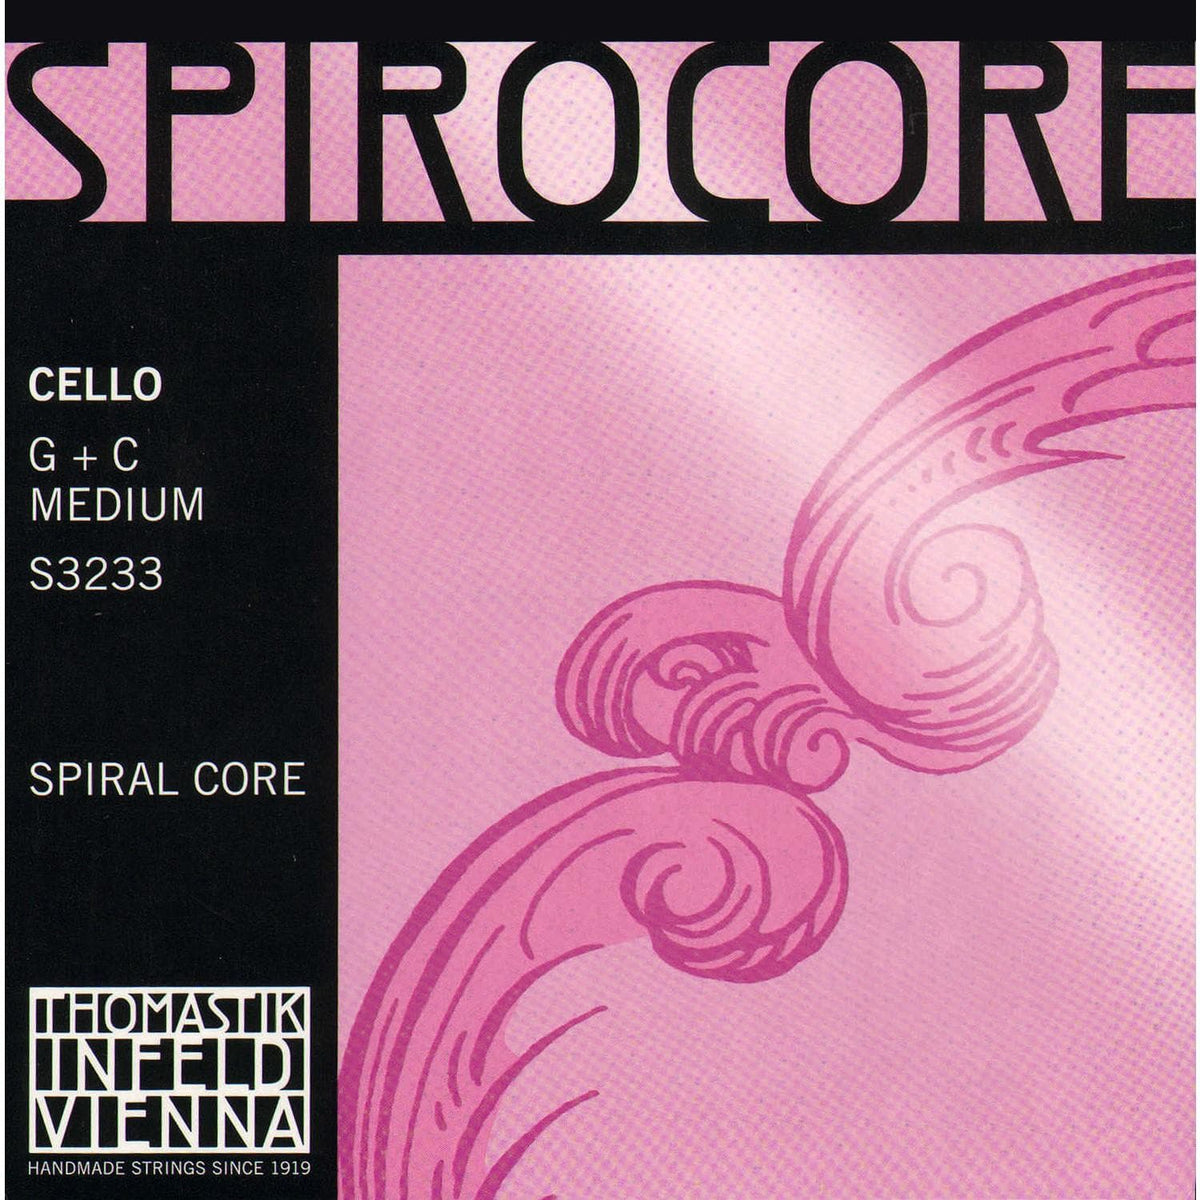 Thomastik-Infeld Cello String Set - Versum Solo A&D and Spirocore G&C - Full Size - Medium Gage